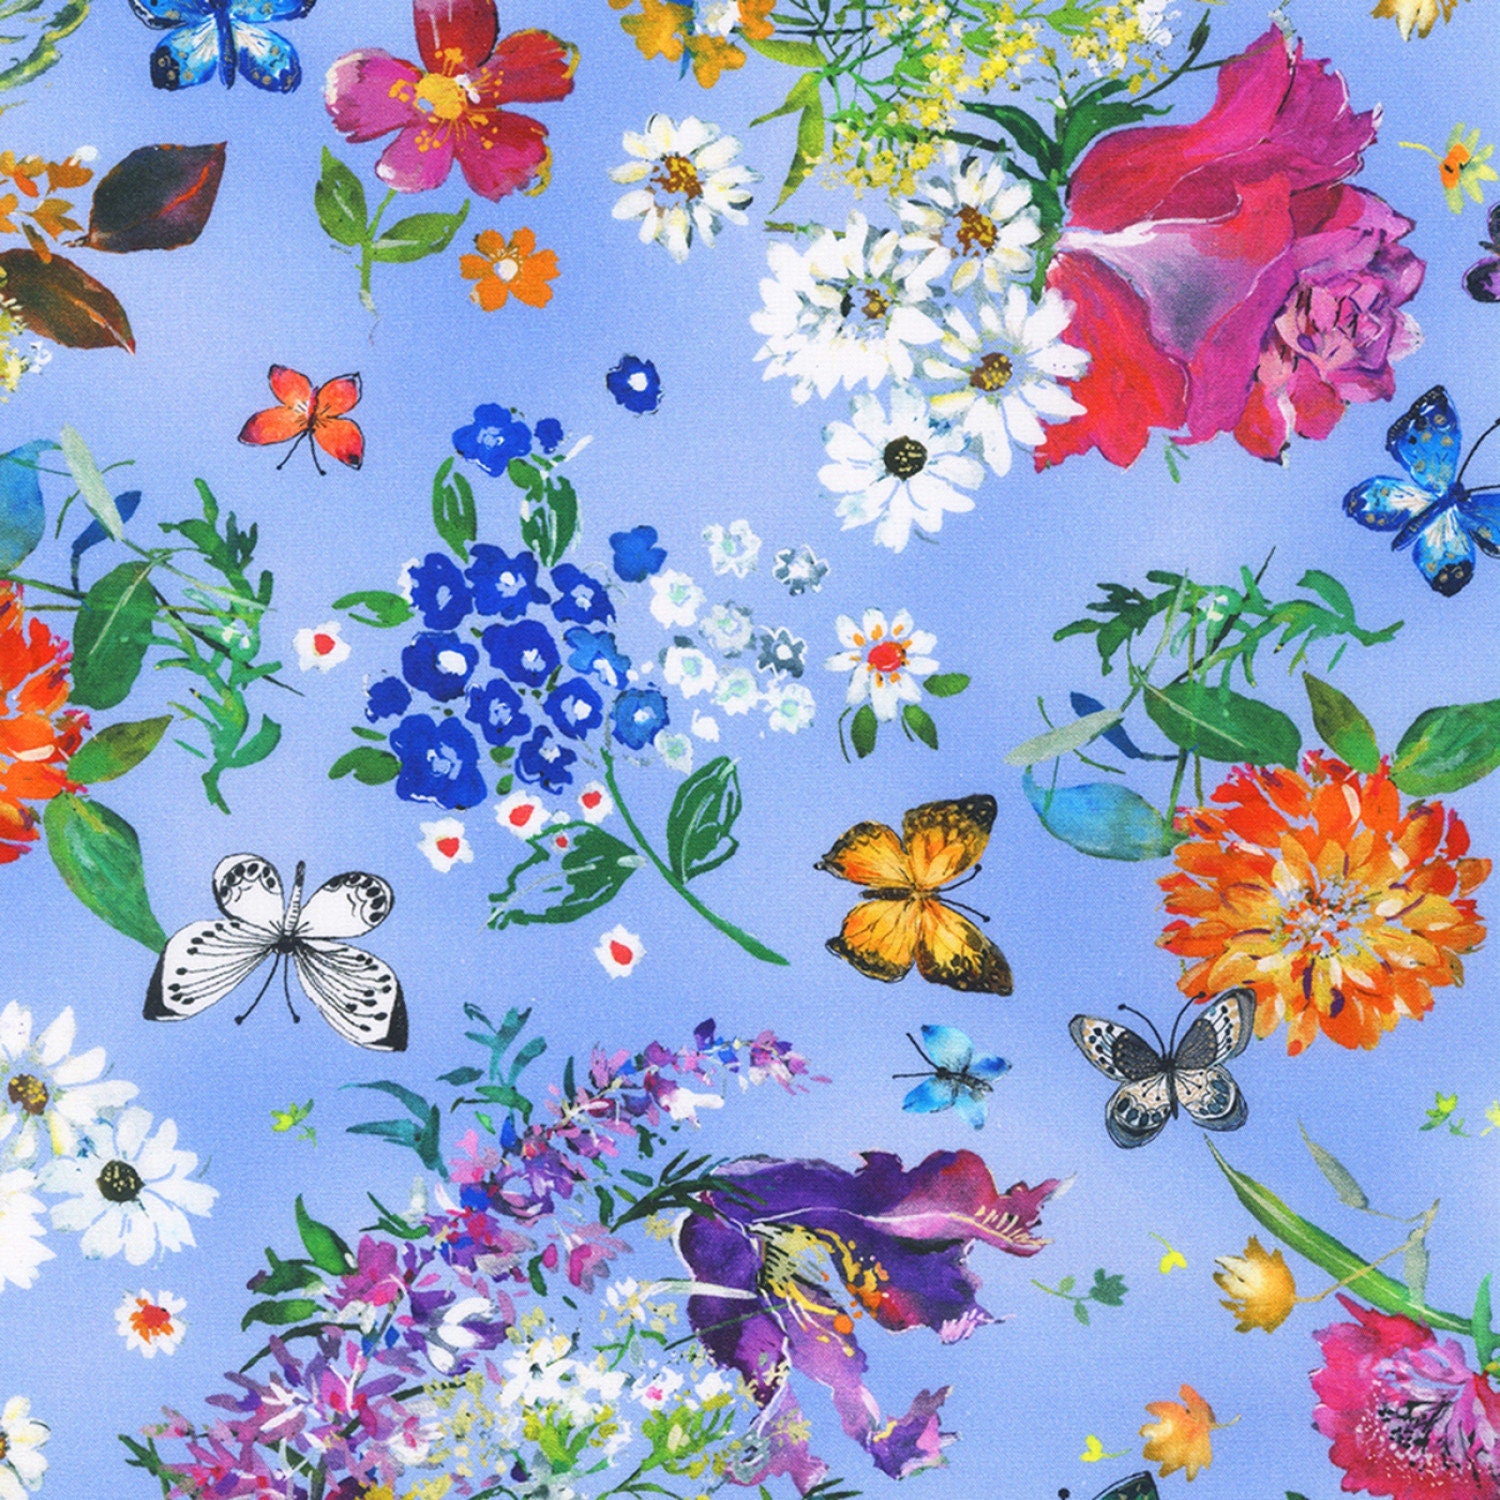 Joyful Meadows Charm Squares, Robert Kaufman CHS-1140-42, Digitally Printed Floral Butterfly Quilt Fabric, 5" Inch Precut Fabric Squares